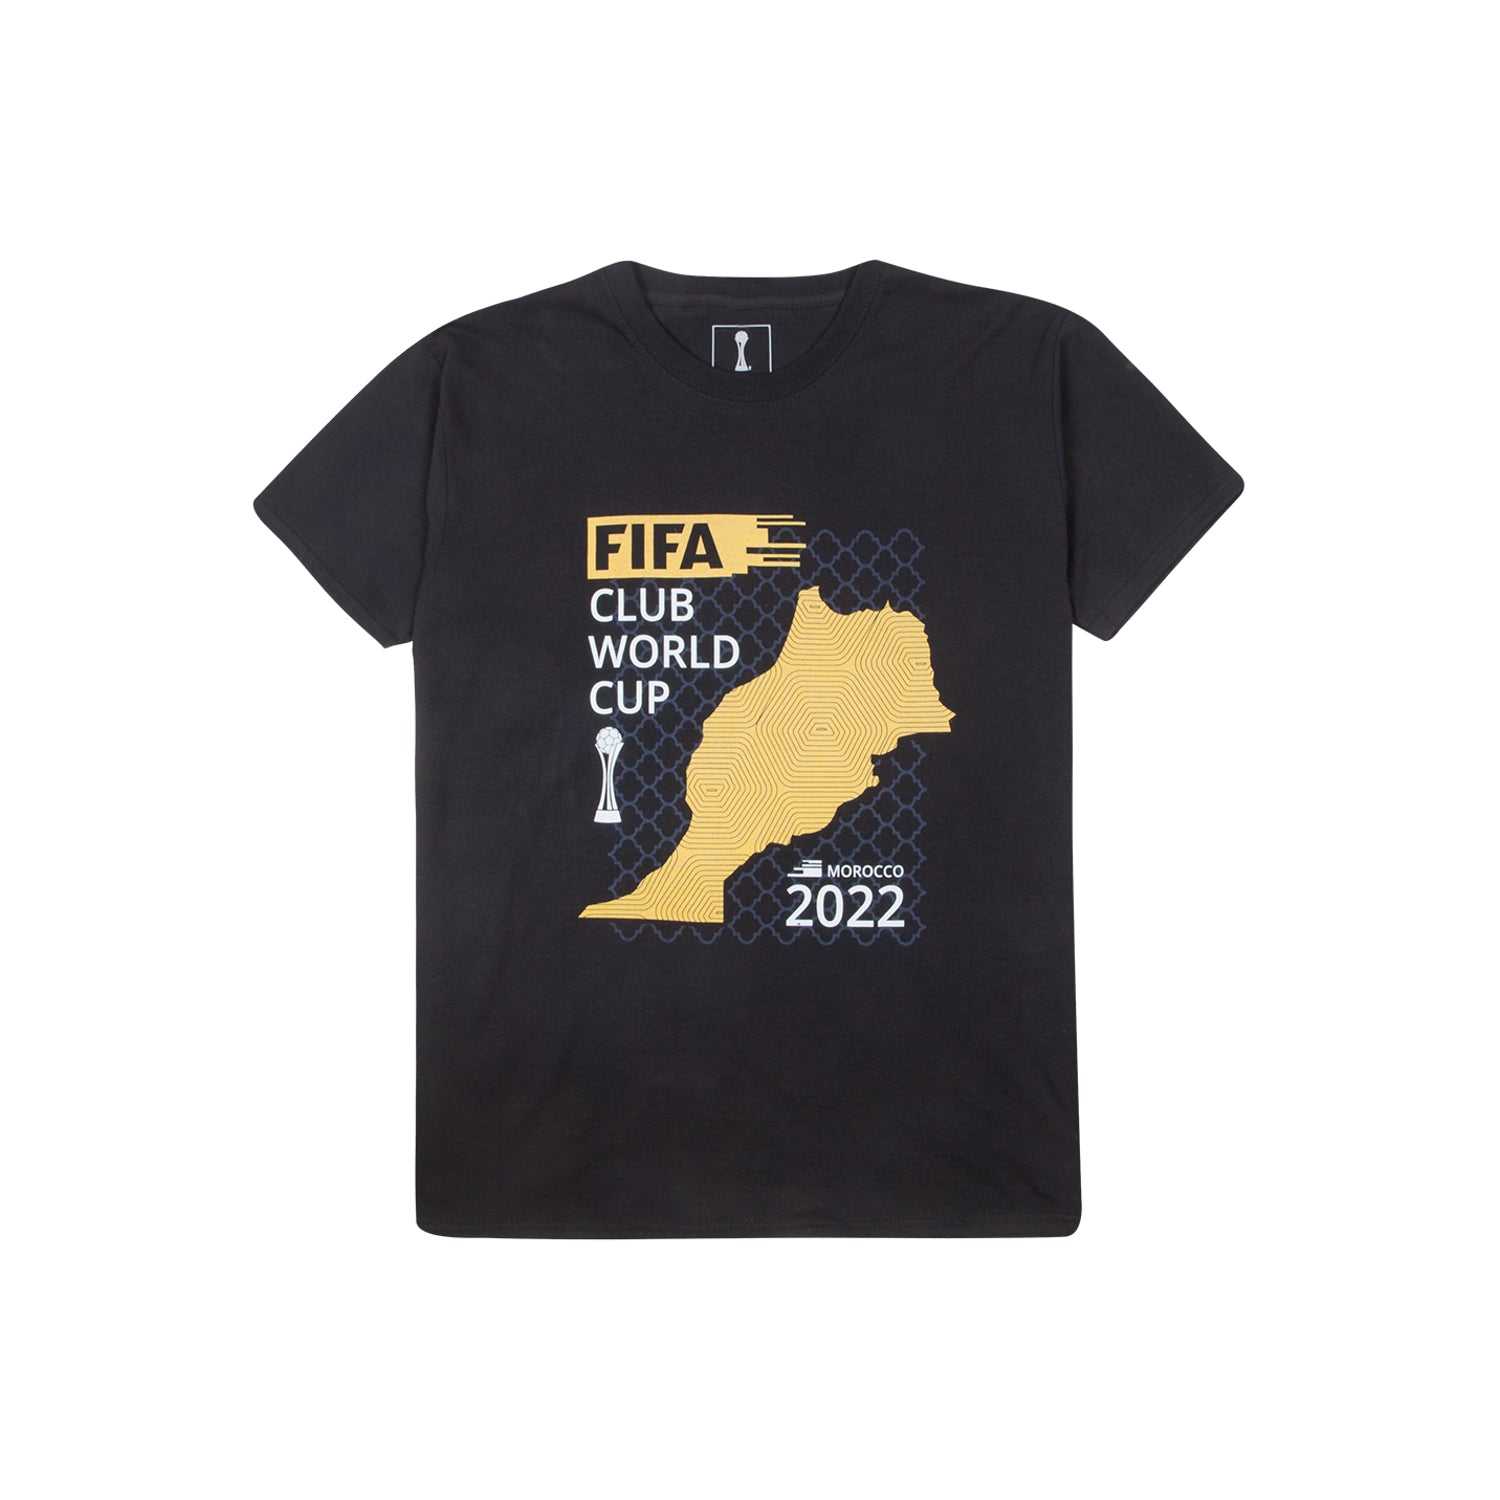 FIFA Club World Cup 2022 Black T-Shirt - Mens